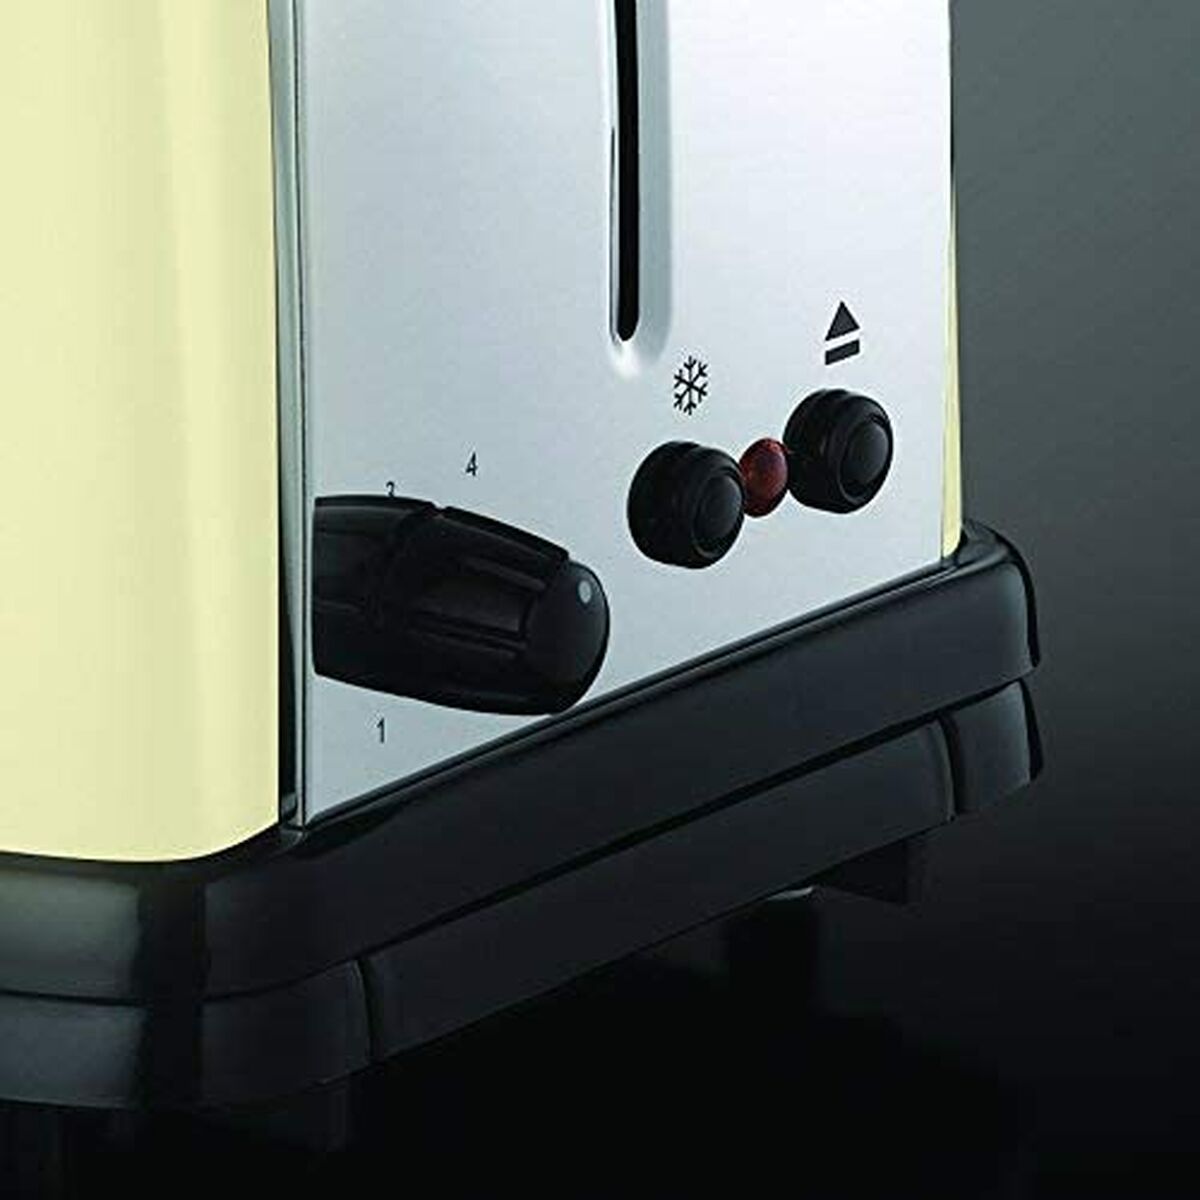 Toaster Russell Hobbs 23334-56 Creme 1100 W - CA International  